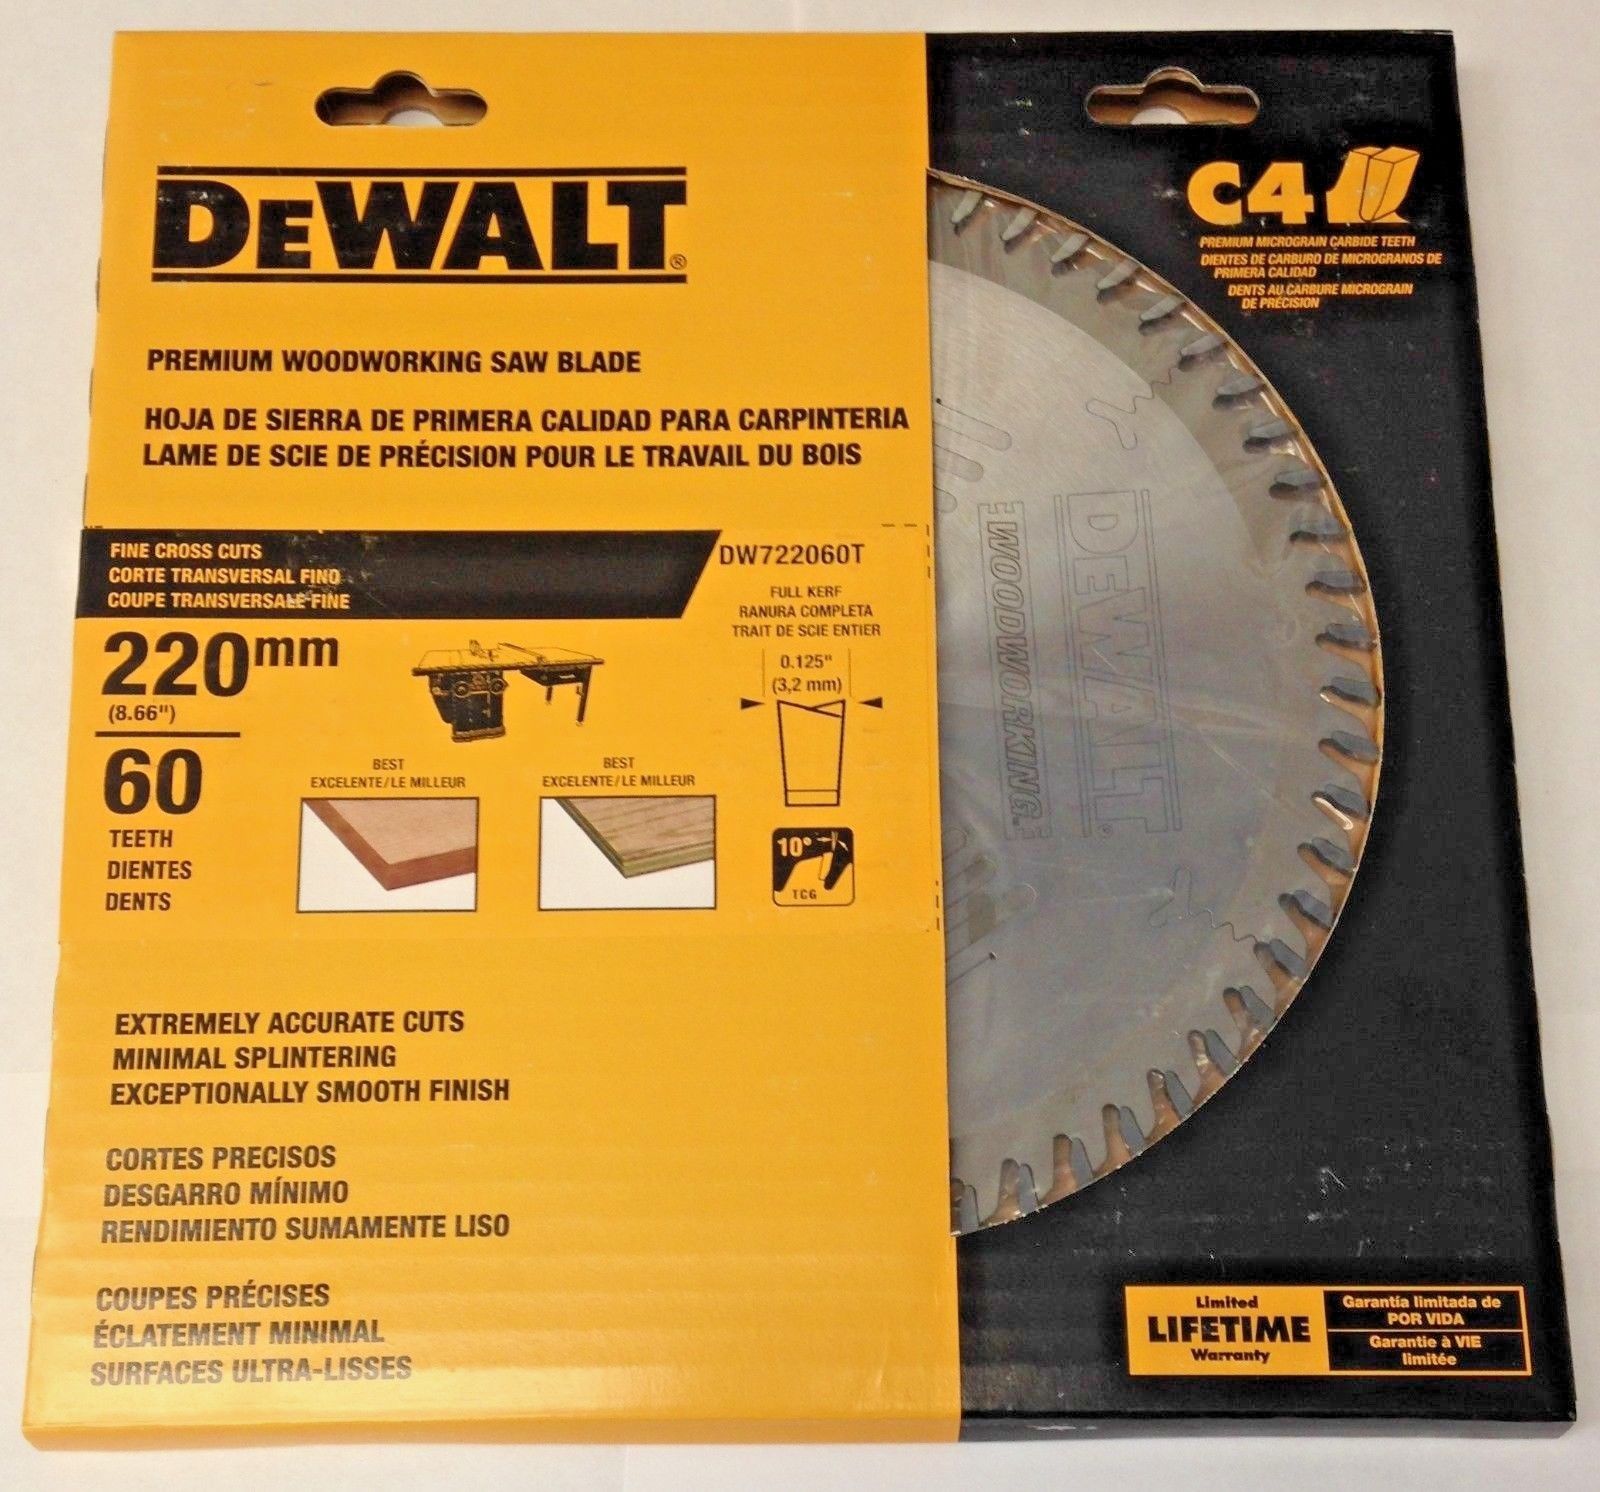 Dewalt DW722060T 220mm x 60 Teeth Full Kerf Premium Woodworking Saw Blade USA